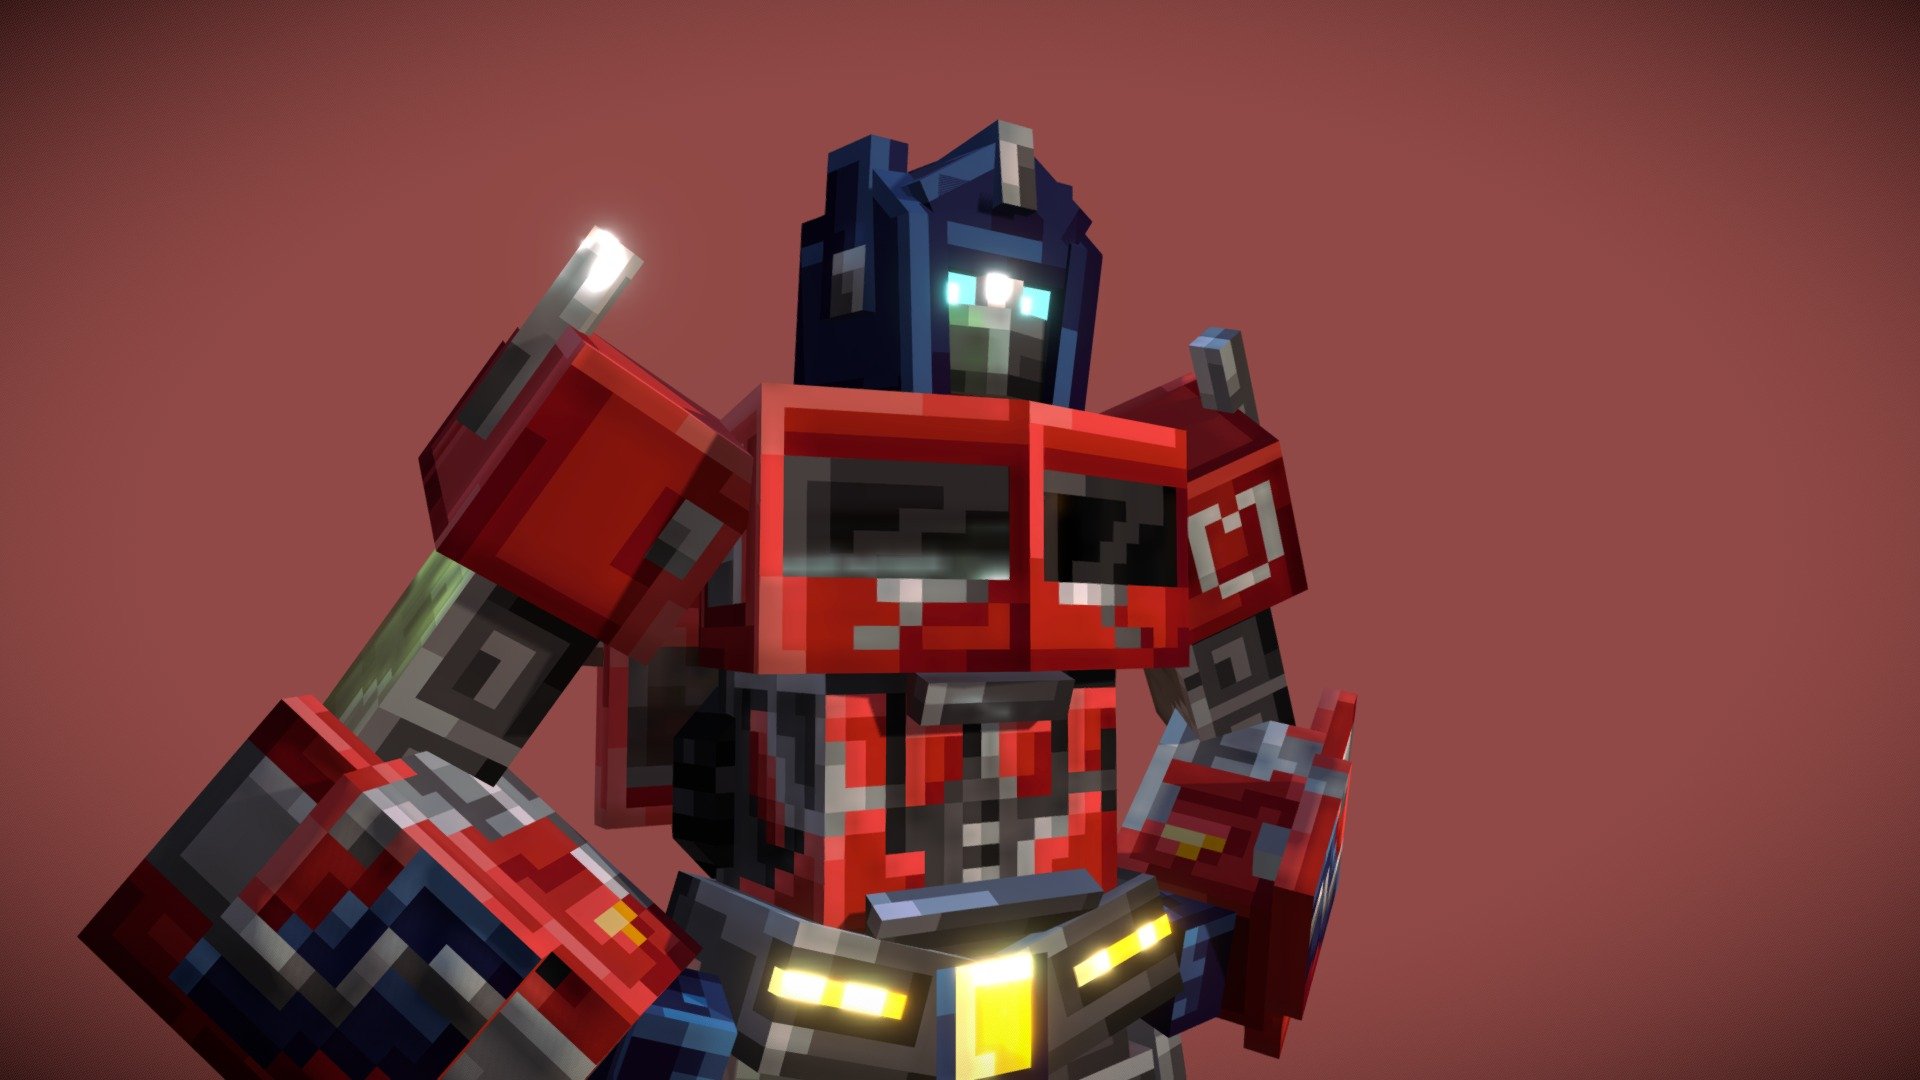 Optimus prime recreated ina minecraft-like style
twitter post: https://twitter.com/natzival/status/1378797909257388040
Made In blockbench - Optimus Prime - 3D model by Charlotte (@nautica_joestar) 3d model